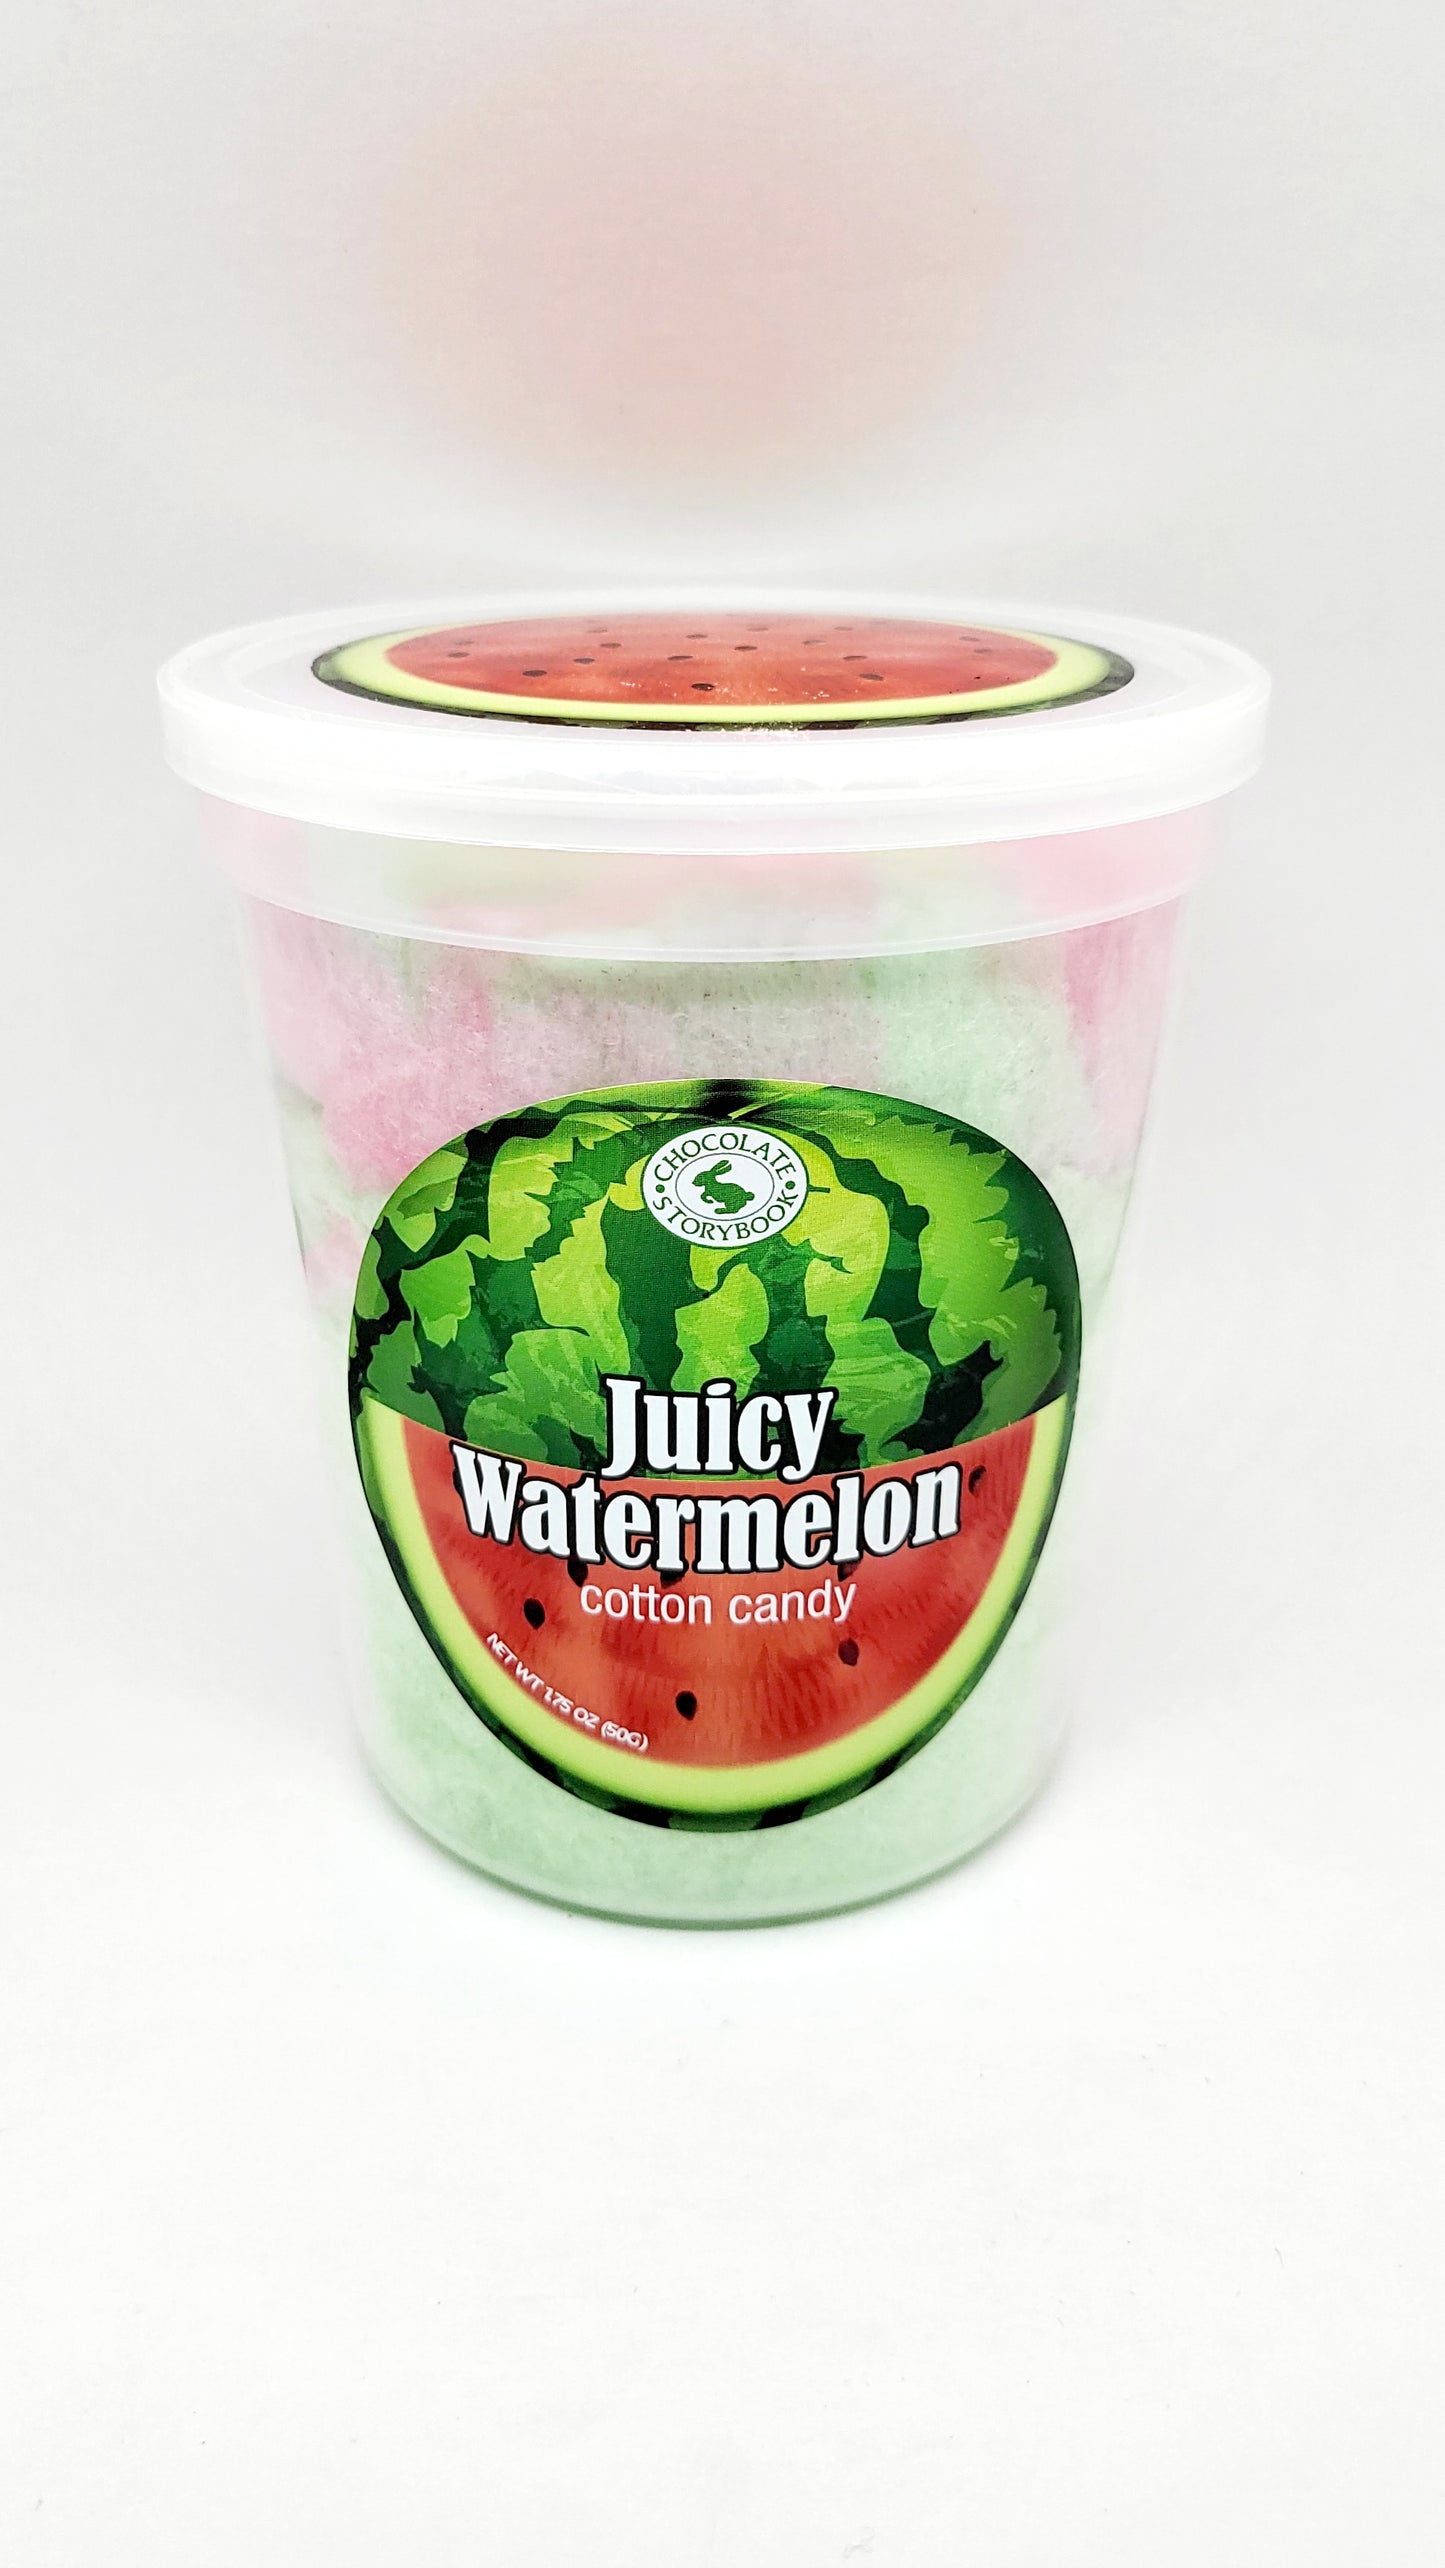 Juicy Watermelon Cotton Candy 1.75 oz